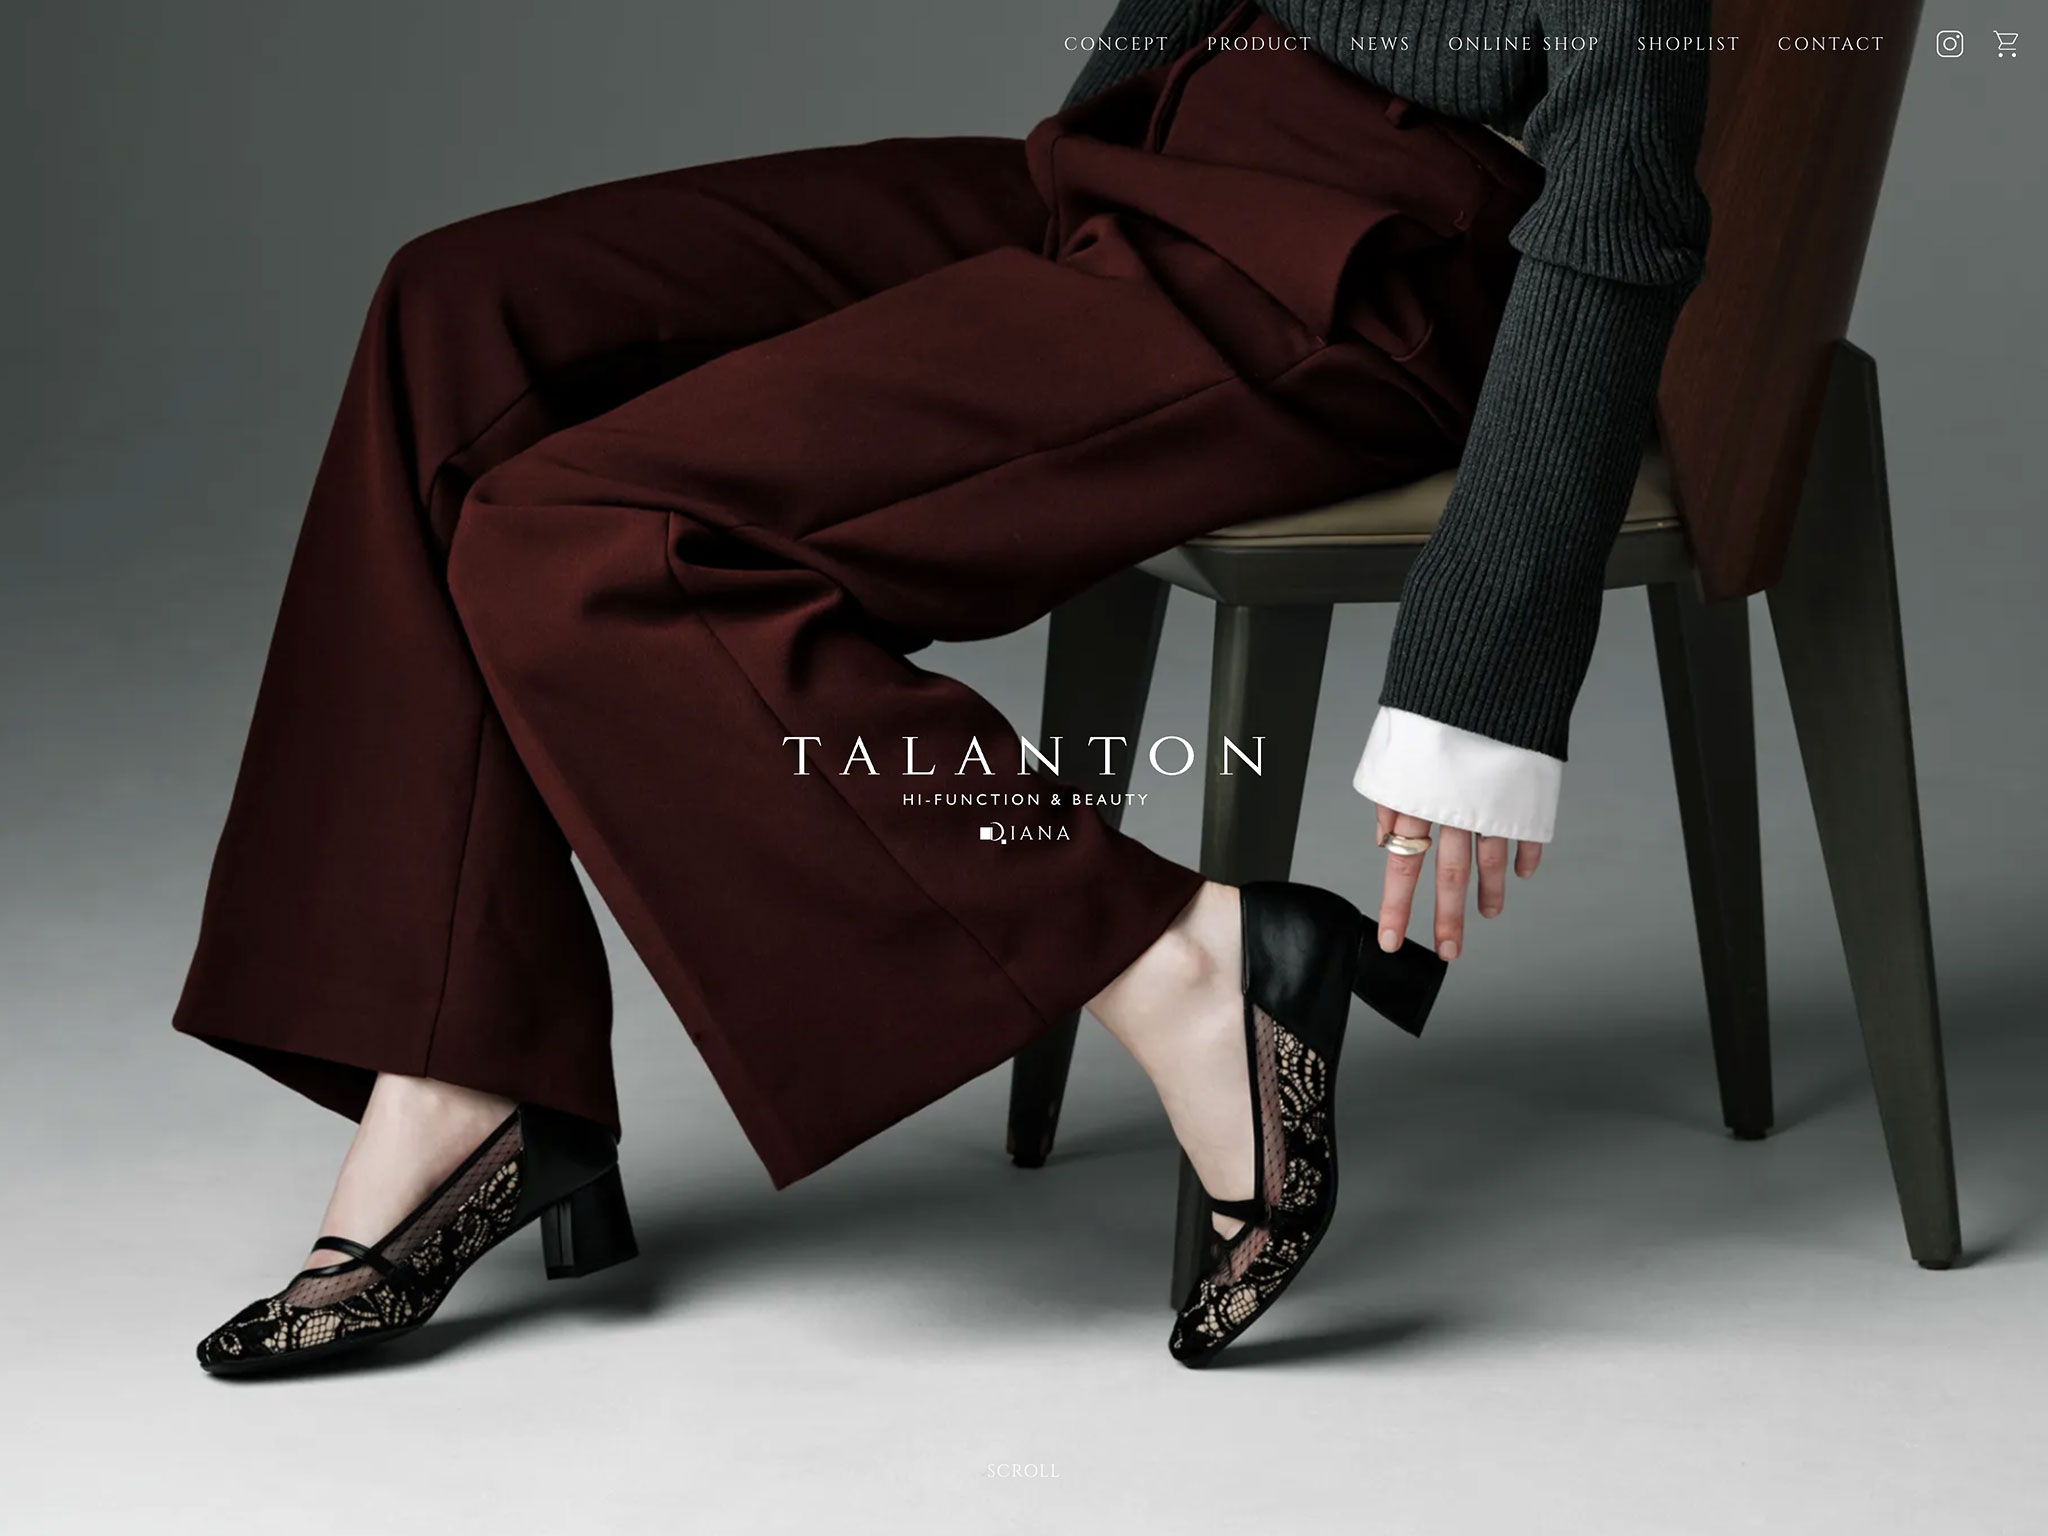 TALANTON by DIANA – タラントン バイ ダイアナ 公式サイト